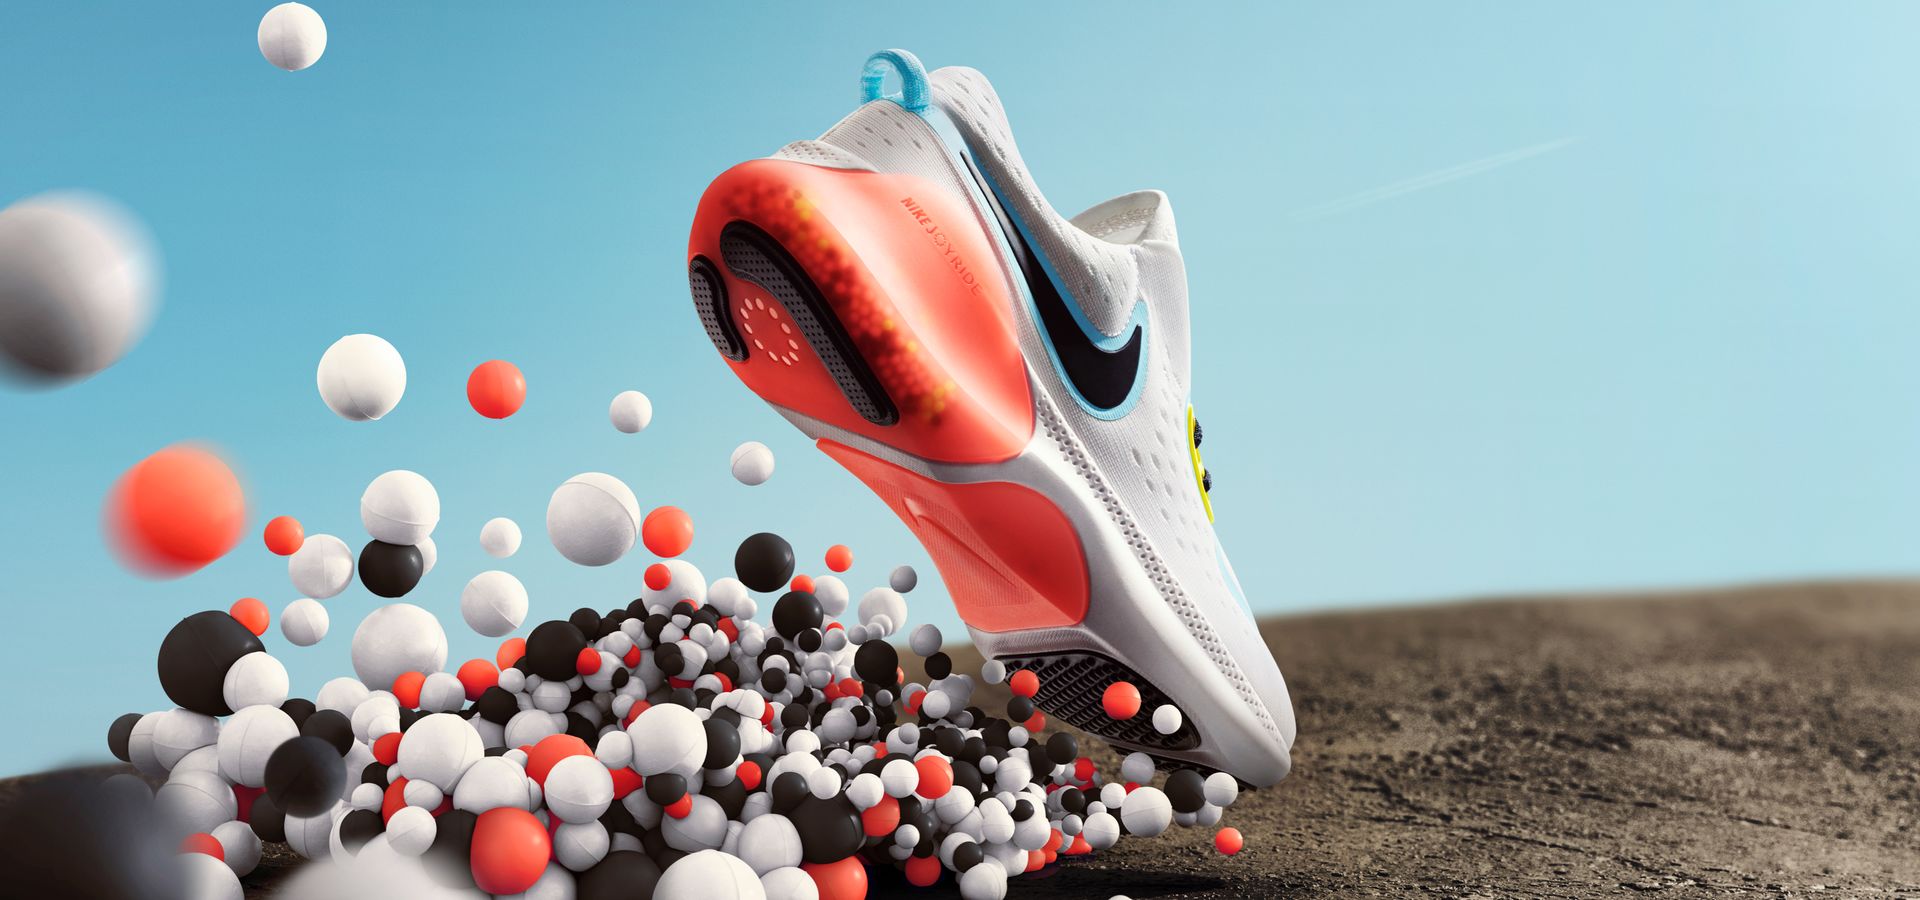 Nike Air Max 97 Khaki AQ4137 200 Release Date Sneaker